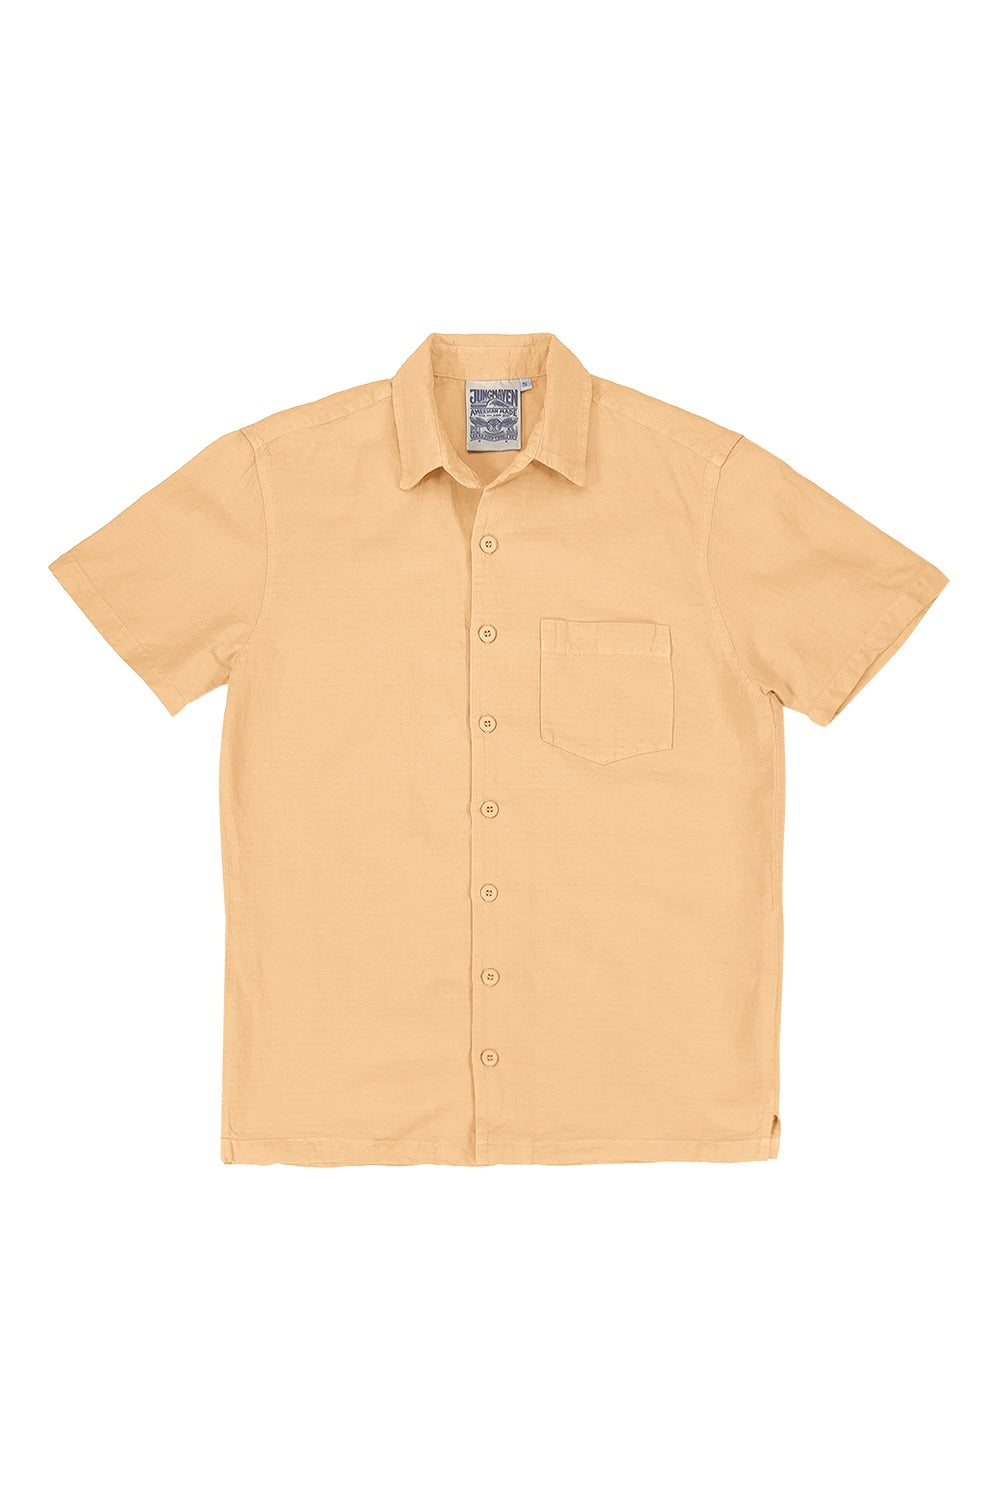 Rincon Shirt | Jungmaven Hemp Clothing & Accessories / Color: Oat Milk